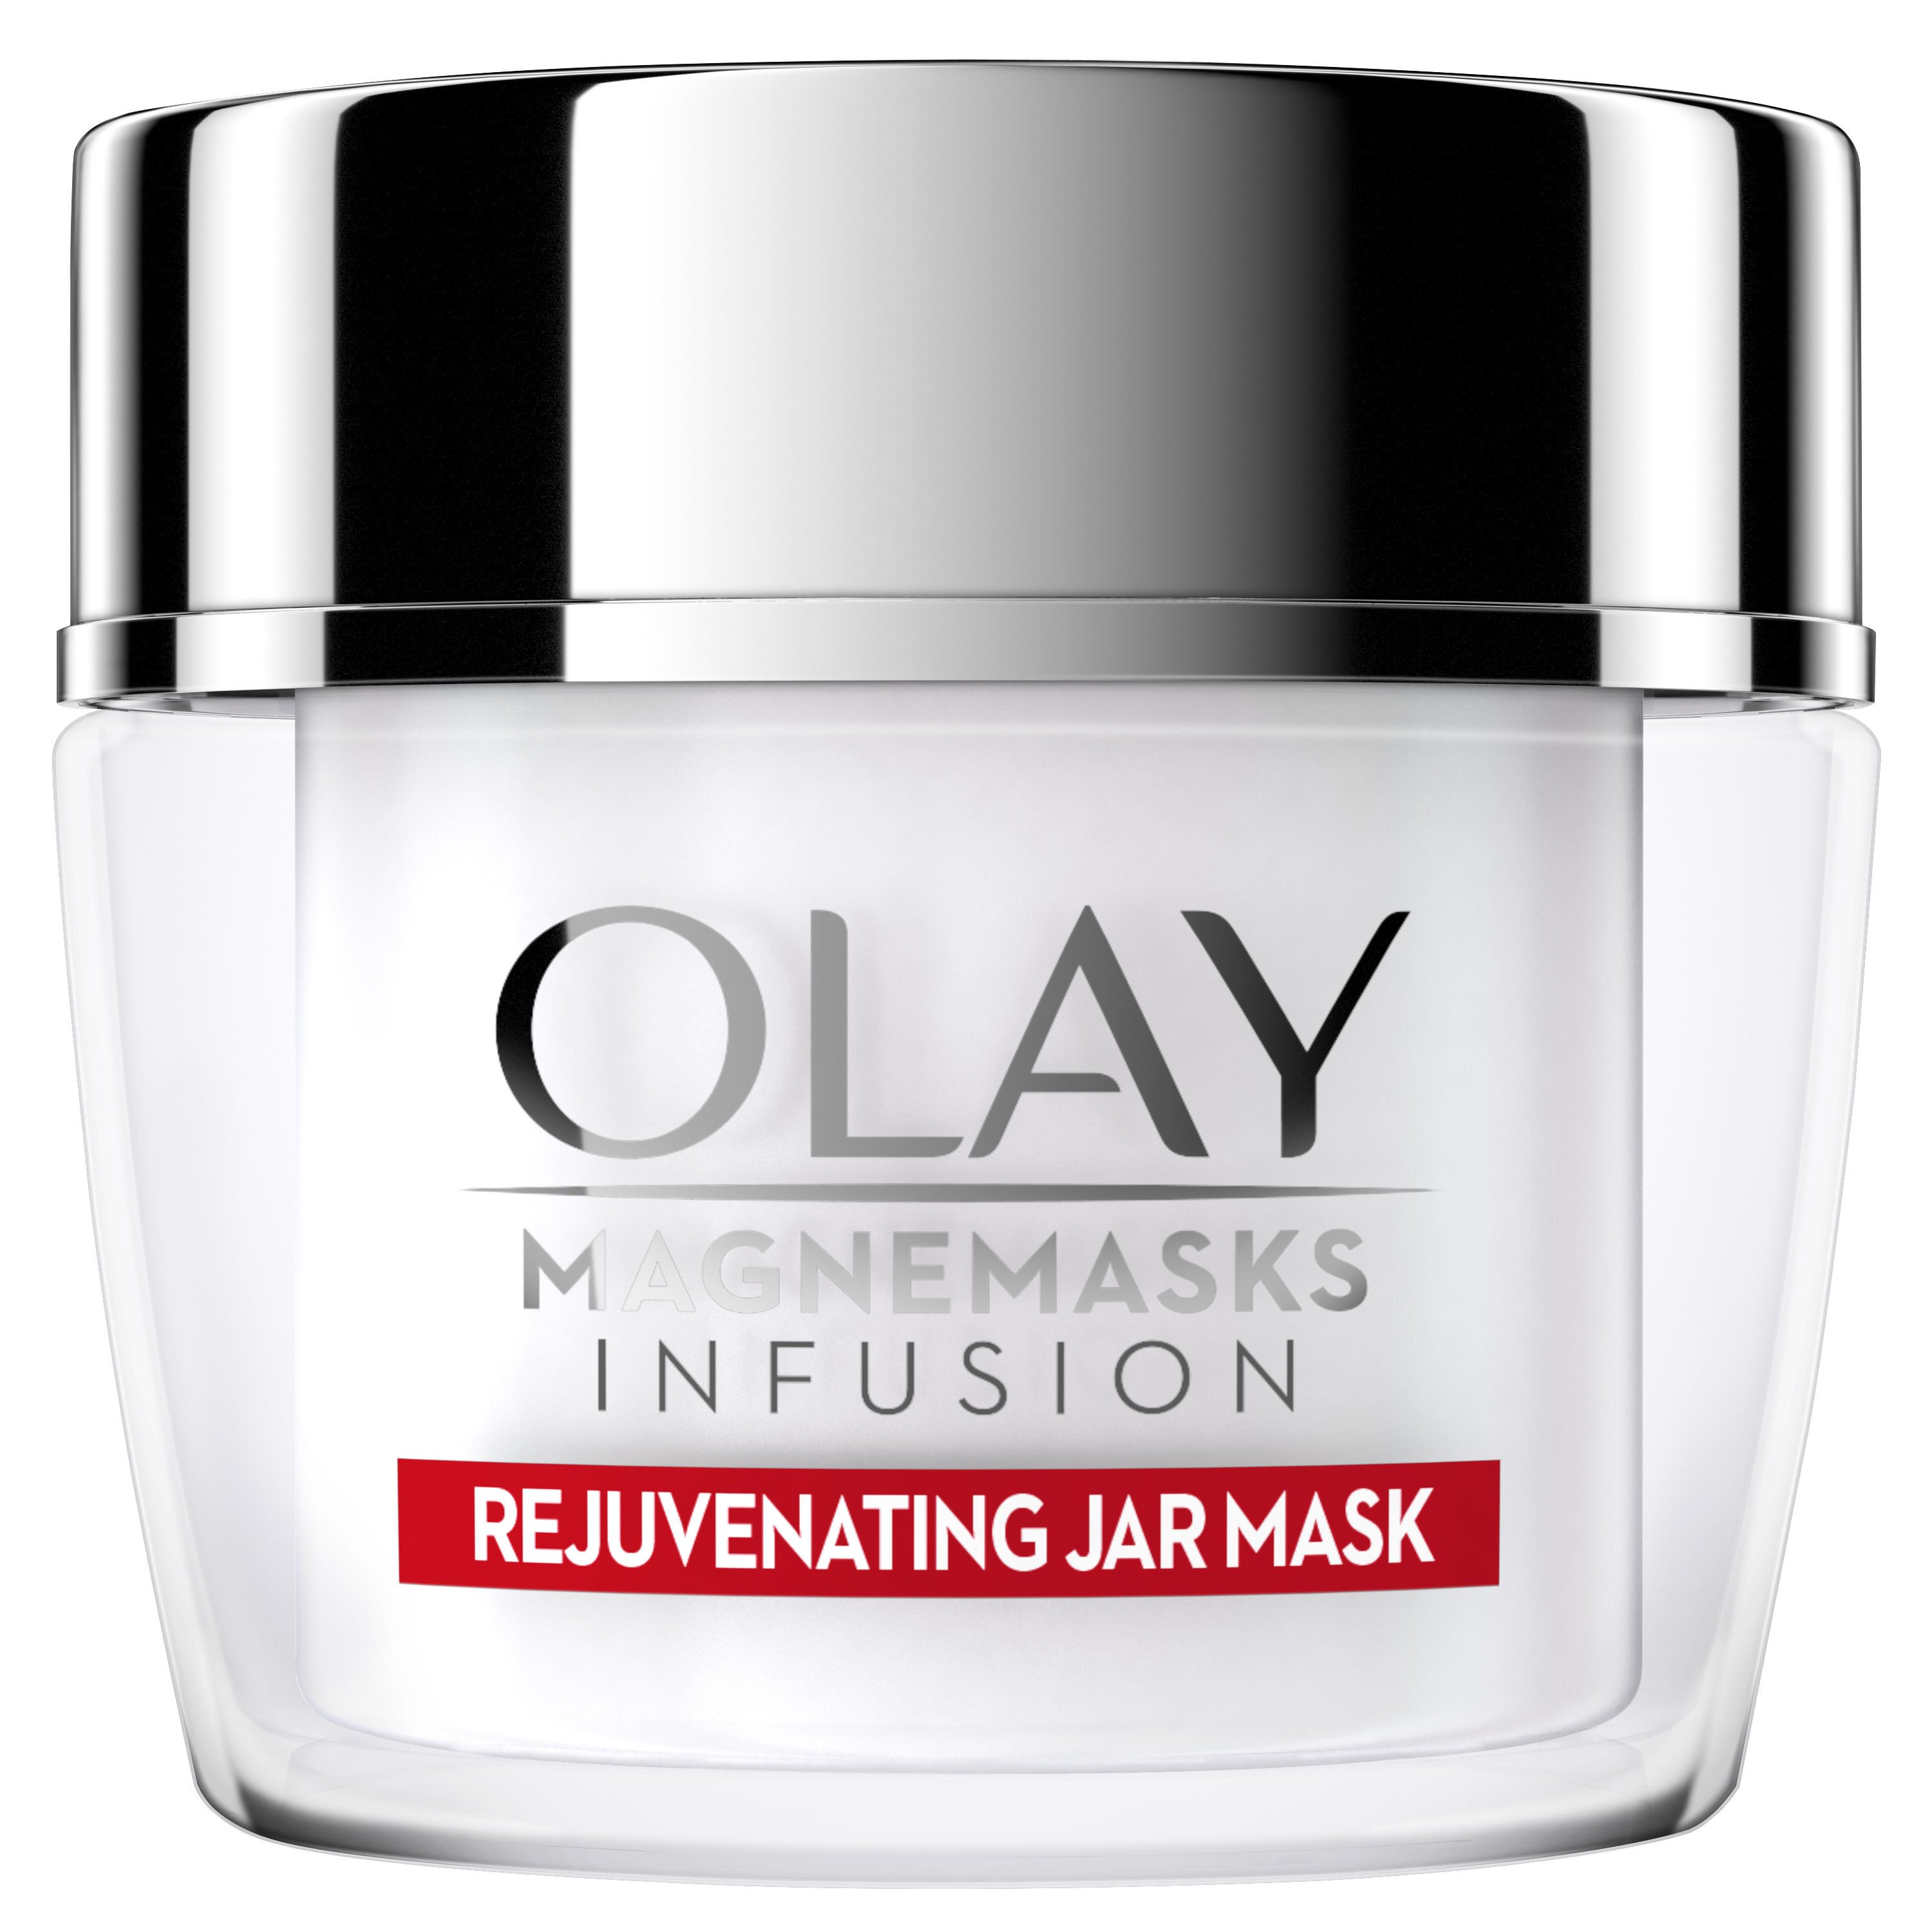 Olay Magnemasks Infusion Rejuvenating Facial Mask Starter Kit